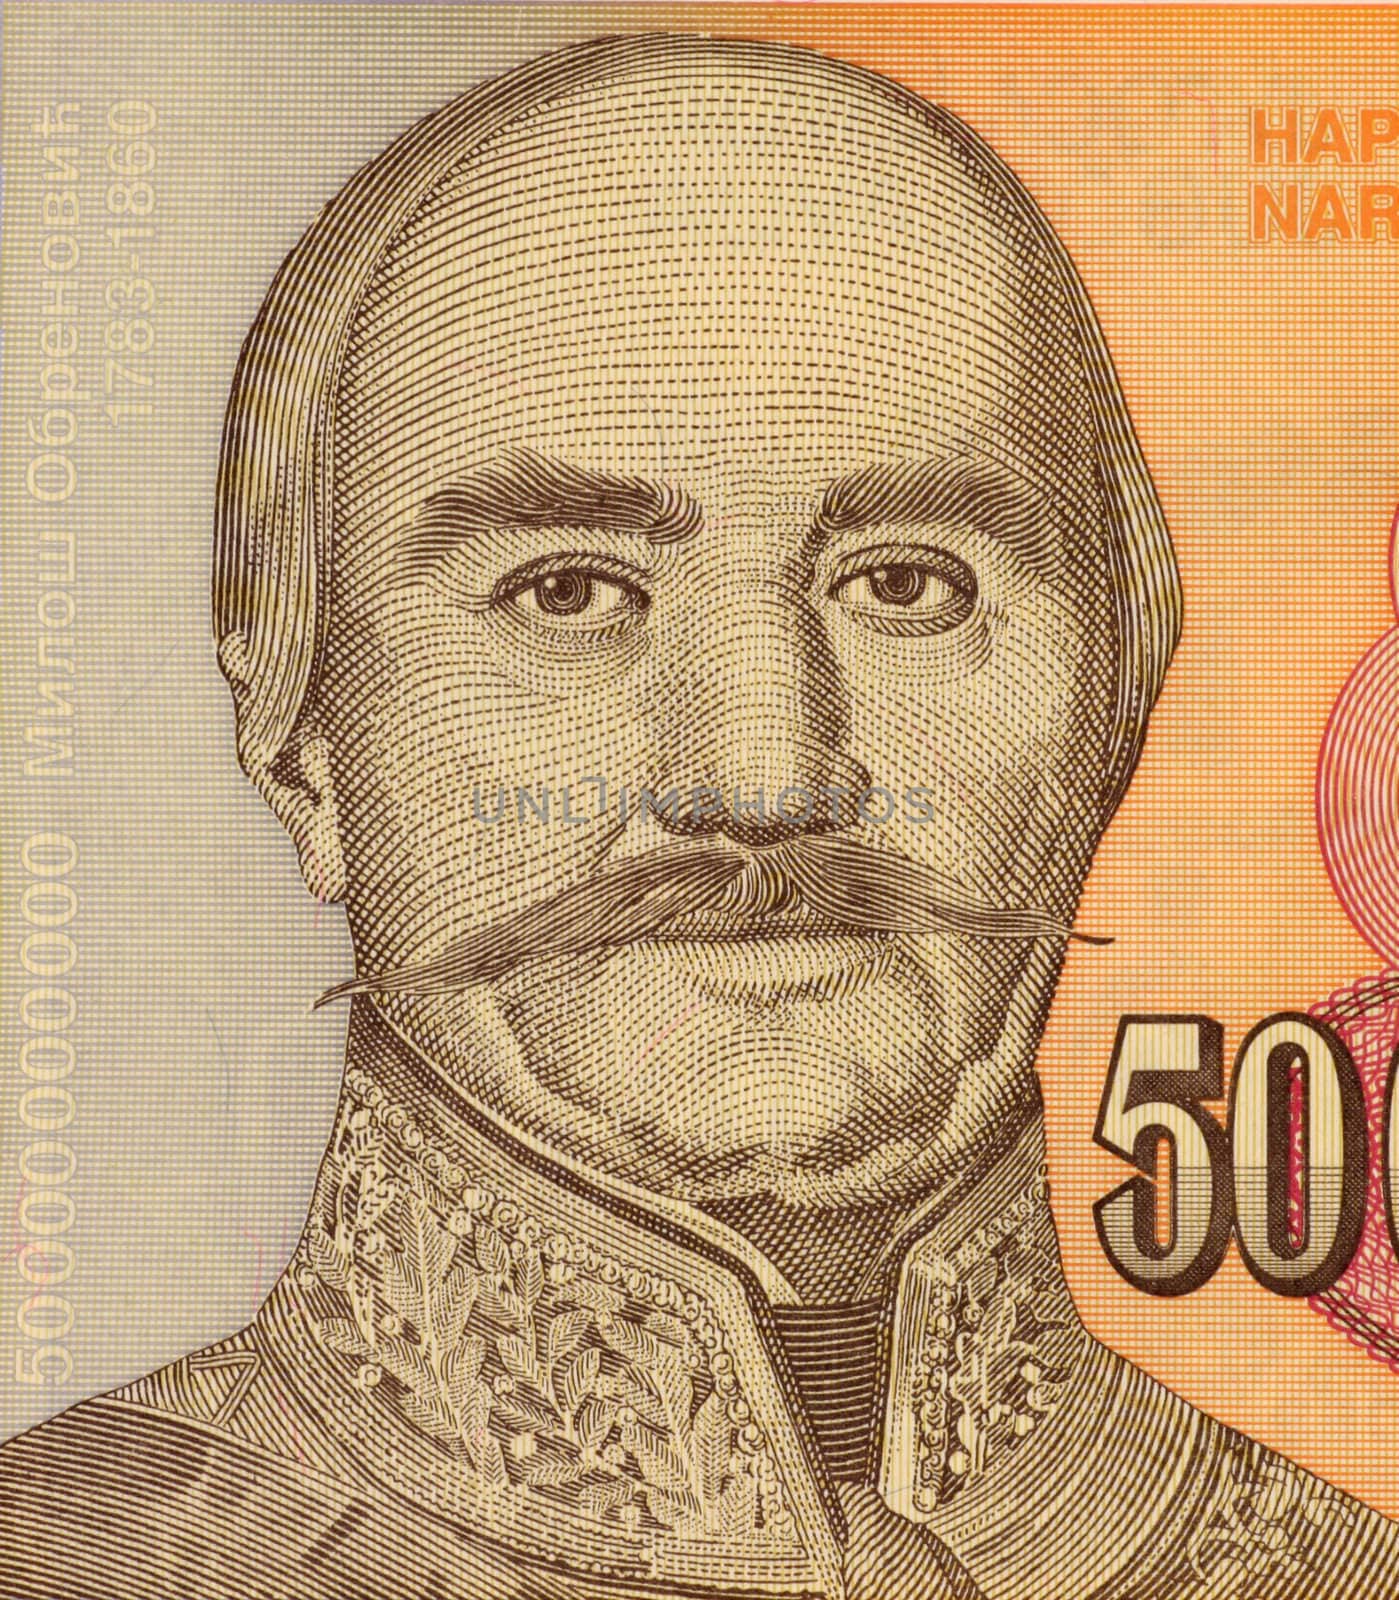 Milan Obrenovic on 50000000 Dinara 1993 Banknote from Yugoslavia. Prince of Serbia.